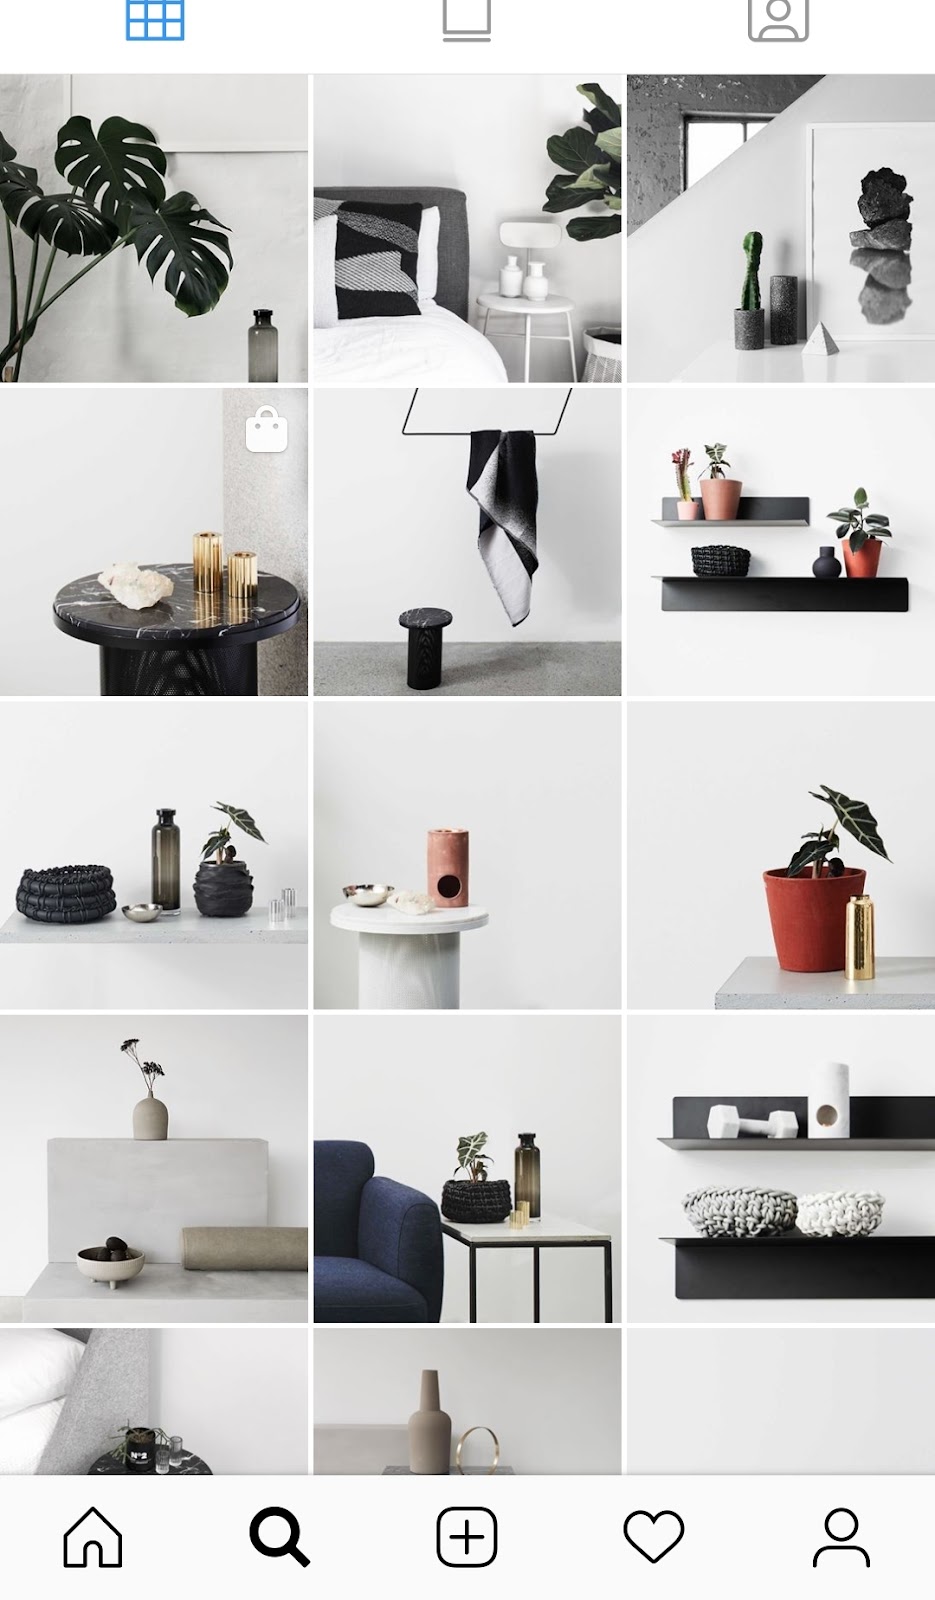 A minimalist Instagram theme/aesthetic from the minimalist